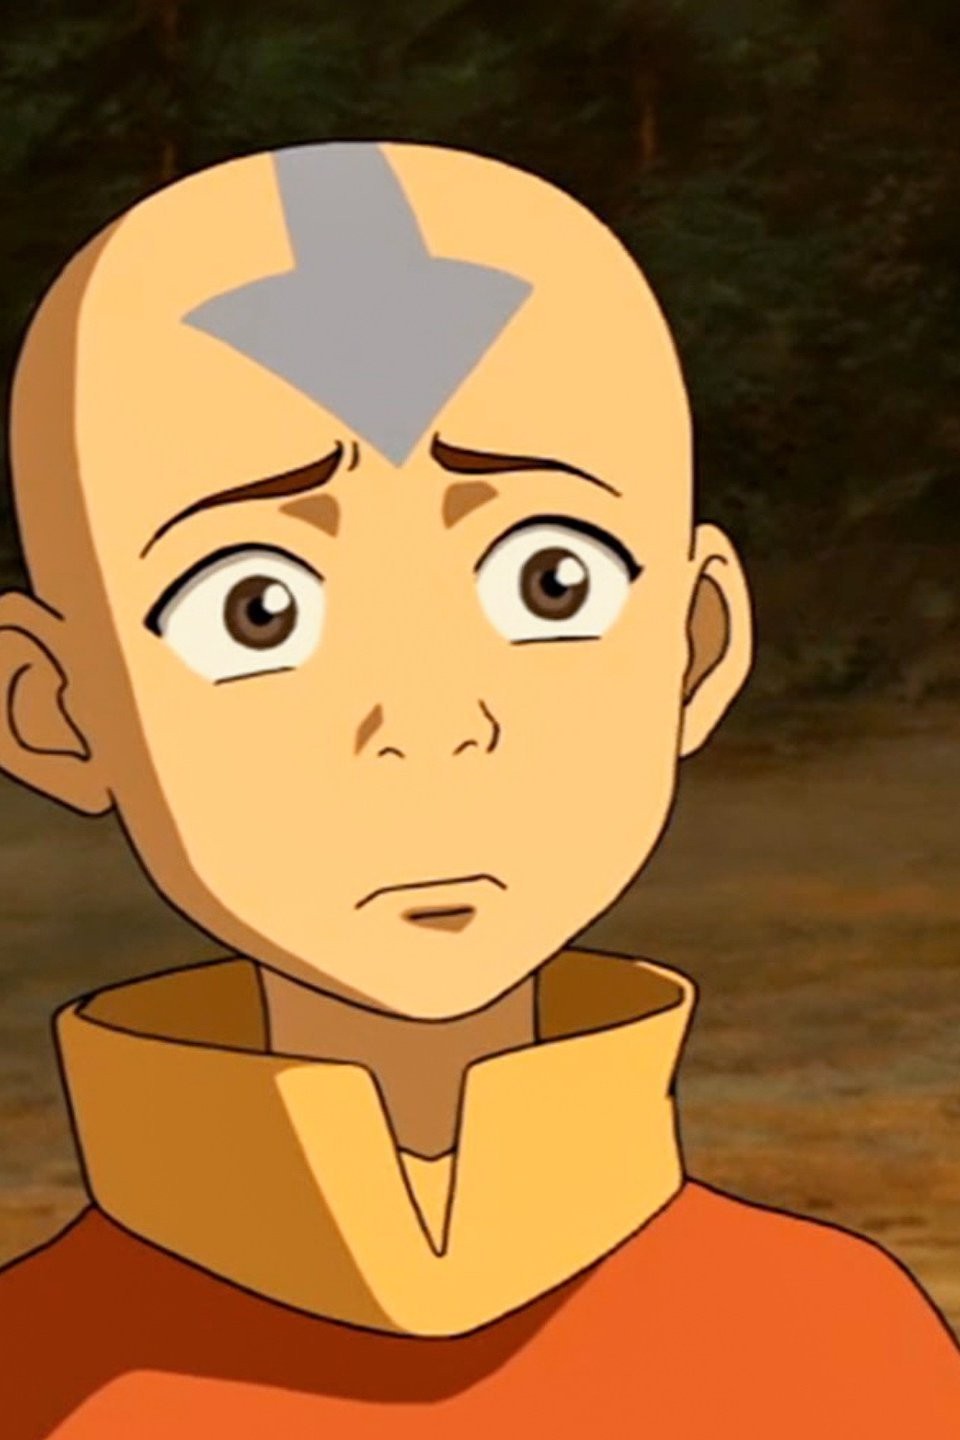 Watch Avatar: The Last Airbender season 1 episode 4 streaming